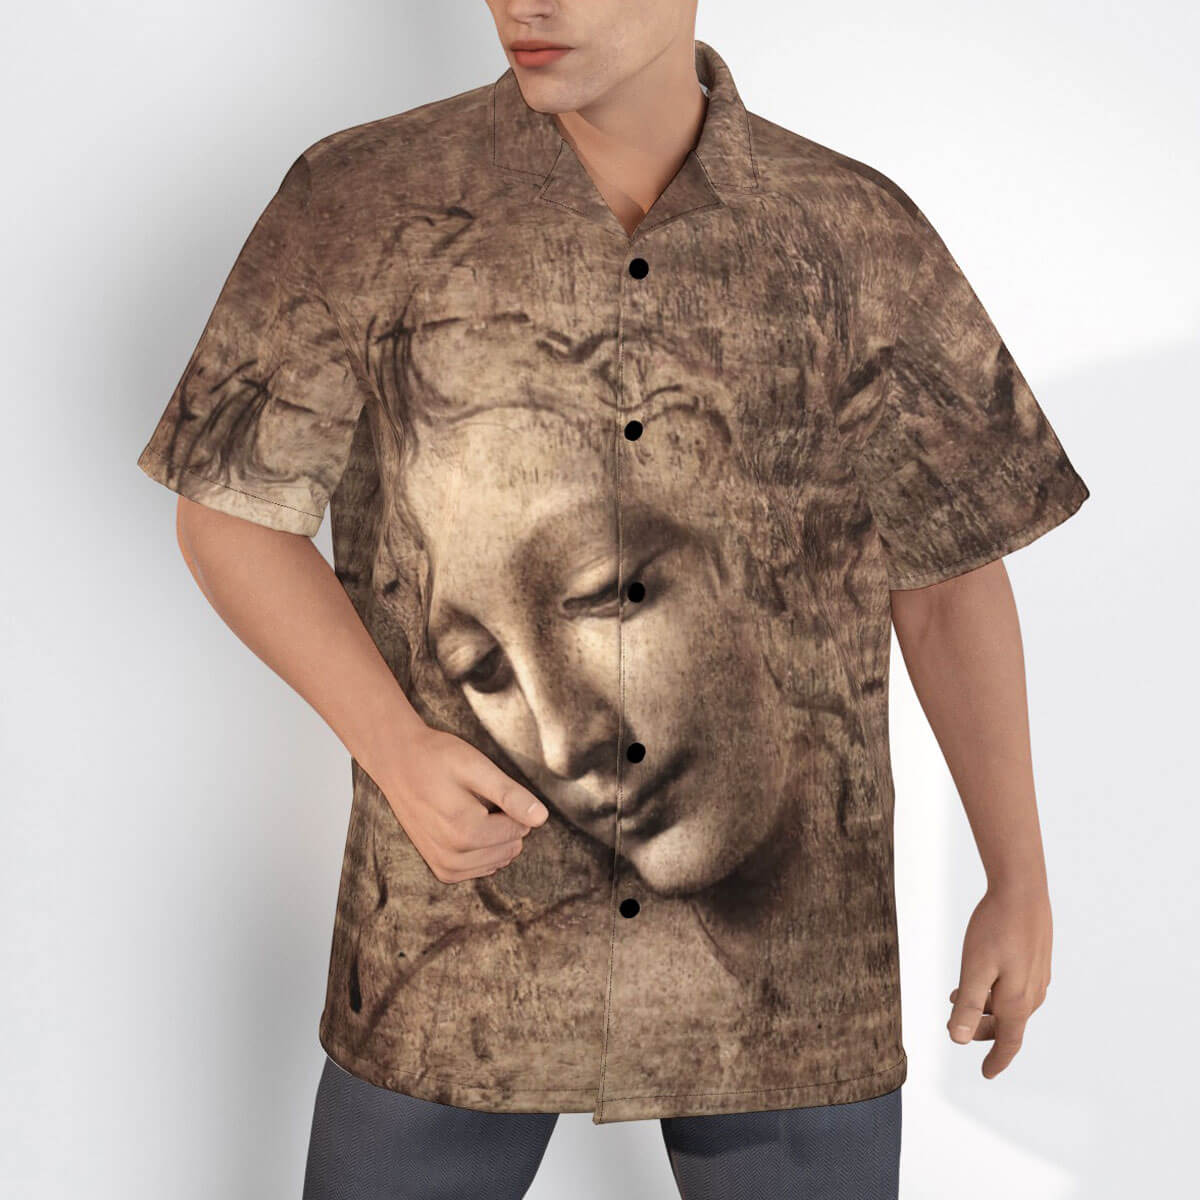 Back view of Head of a Woman by Leonardo da Vinci Shirt showcasing full drawing